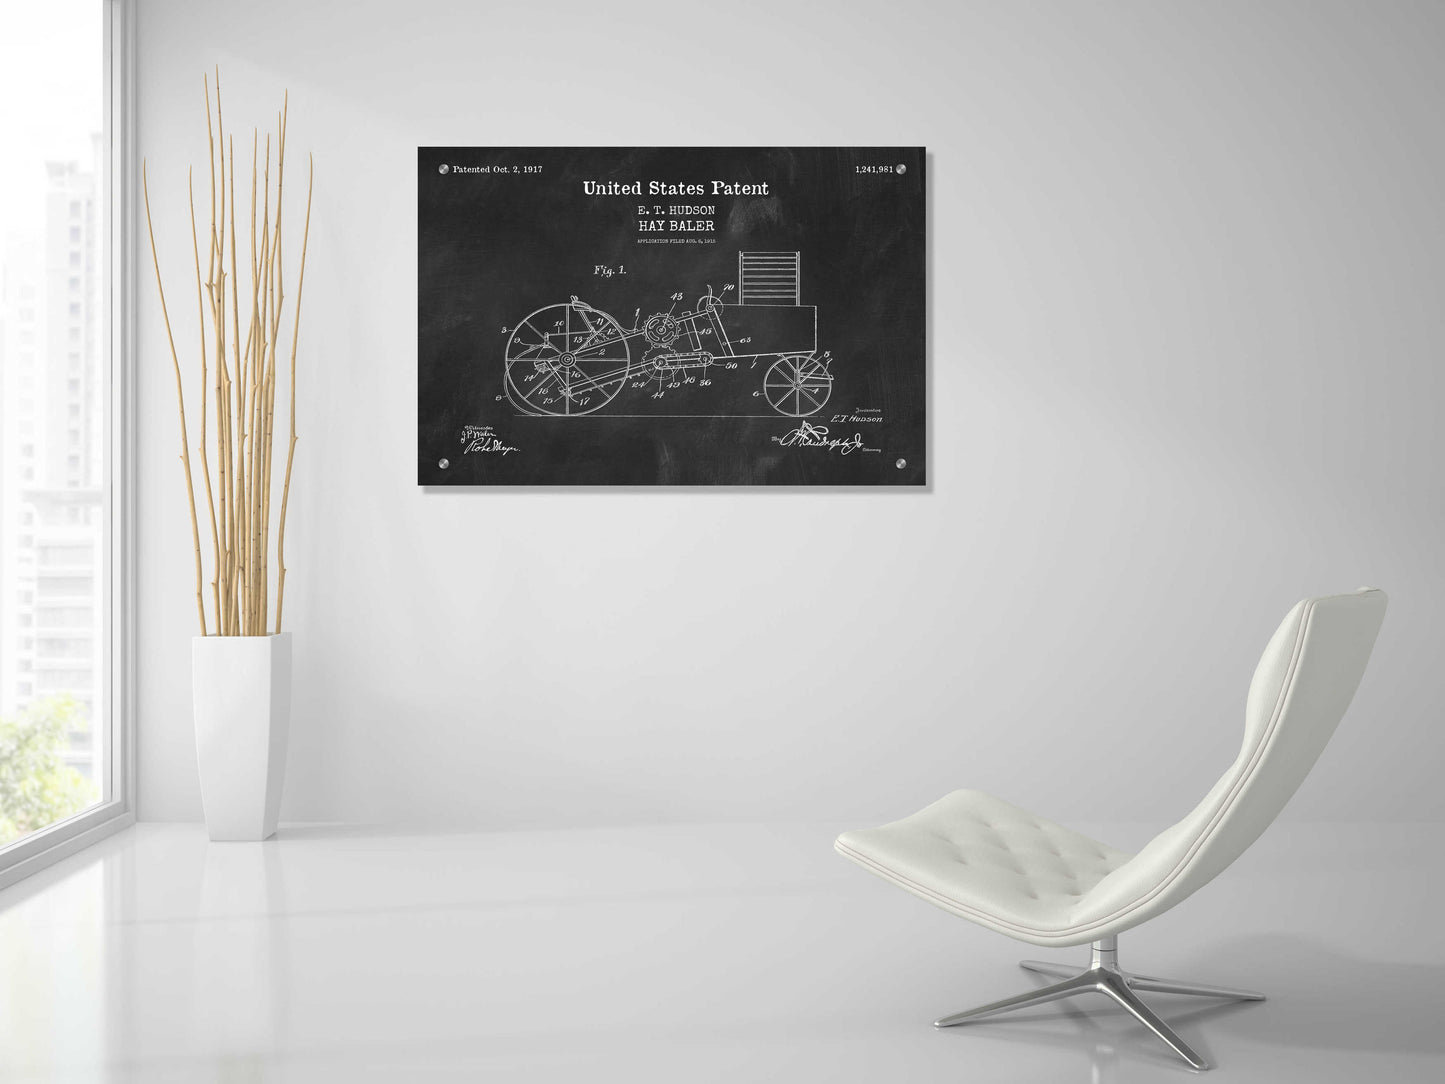 Epic Art 'HayBaler Blueprint Patent Chalkboard,' Acrylic Glass Wall Art,36x24